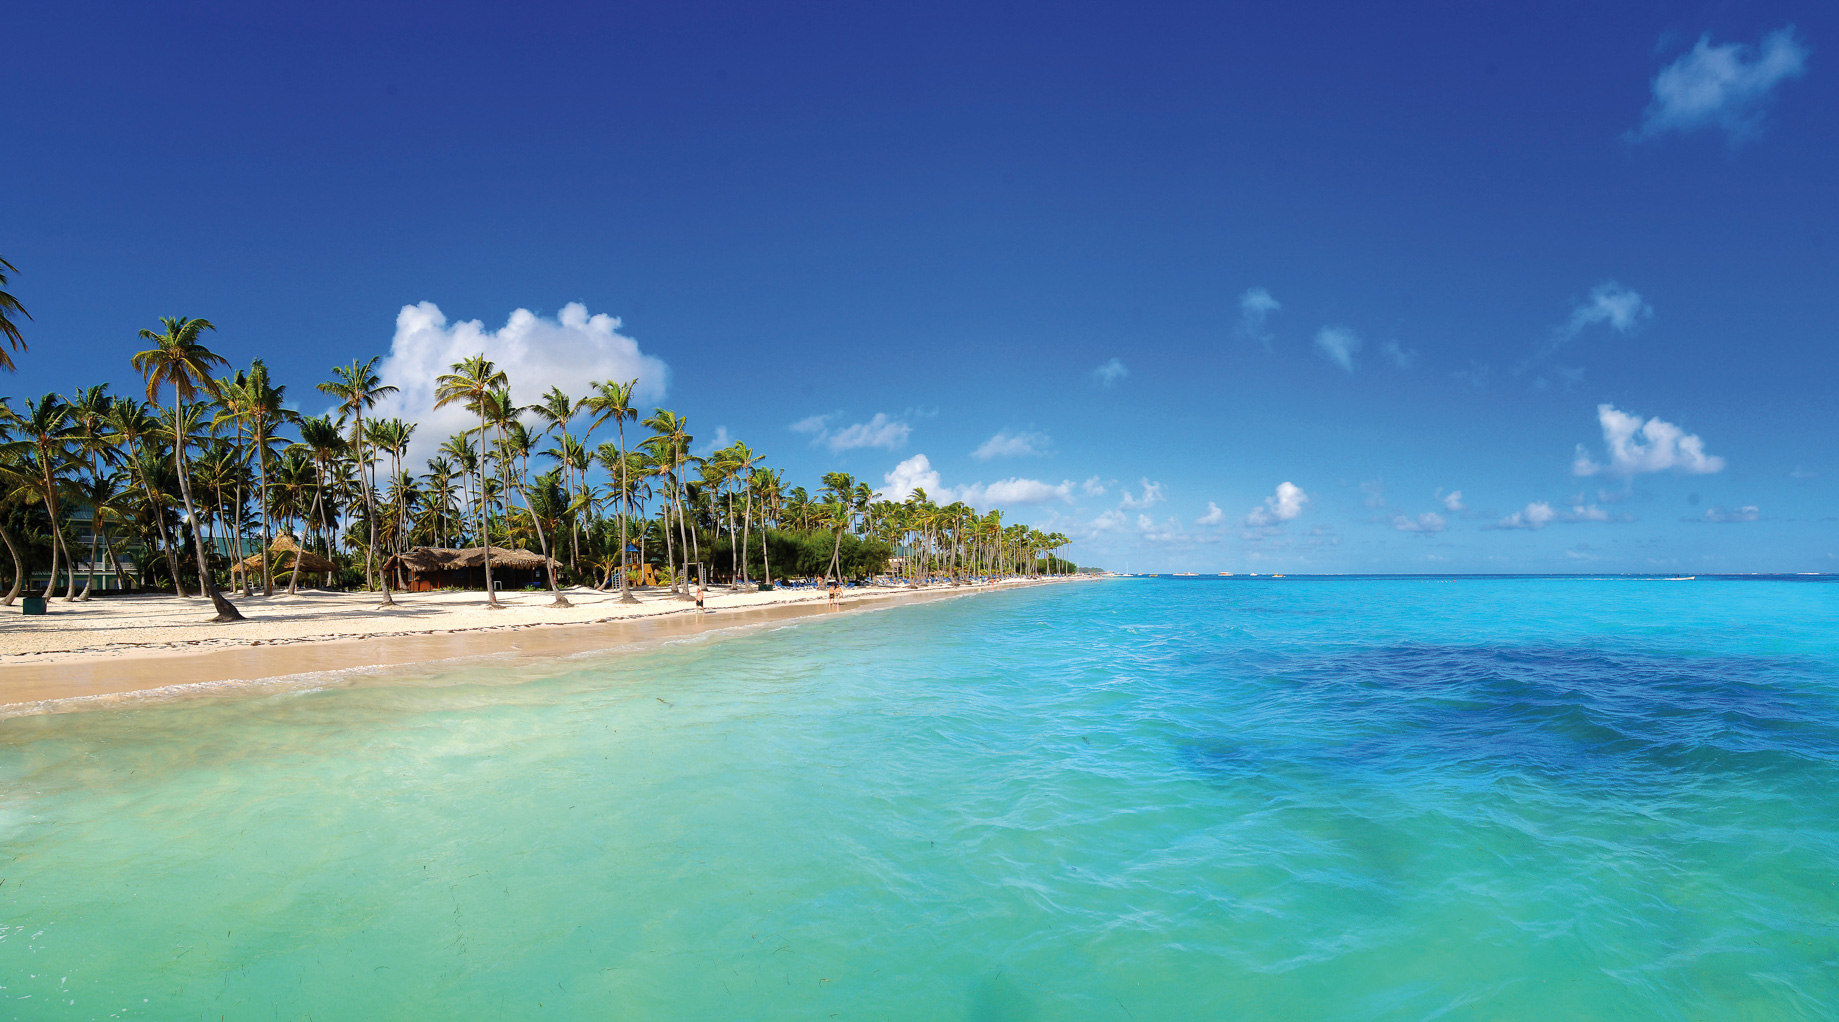 Barceló Bávaro Beach Hotel Grand Resort – Punta Cana, Dominican Republic – Beach